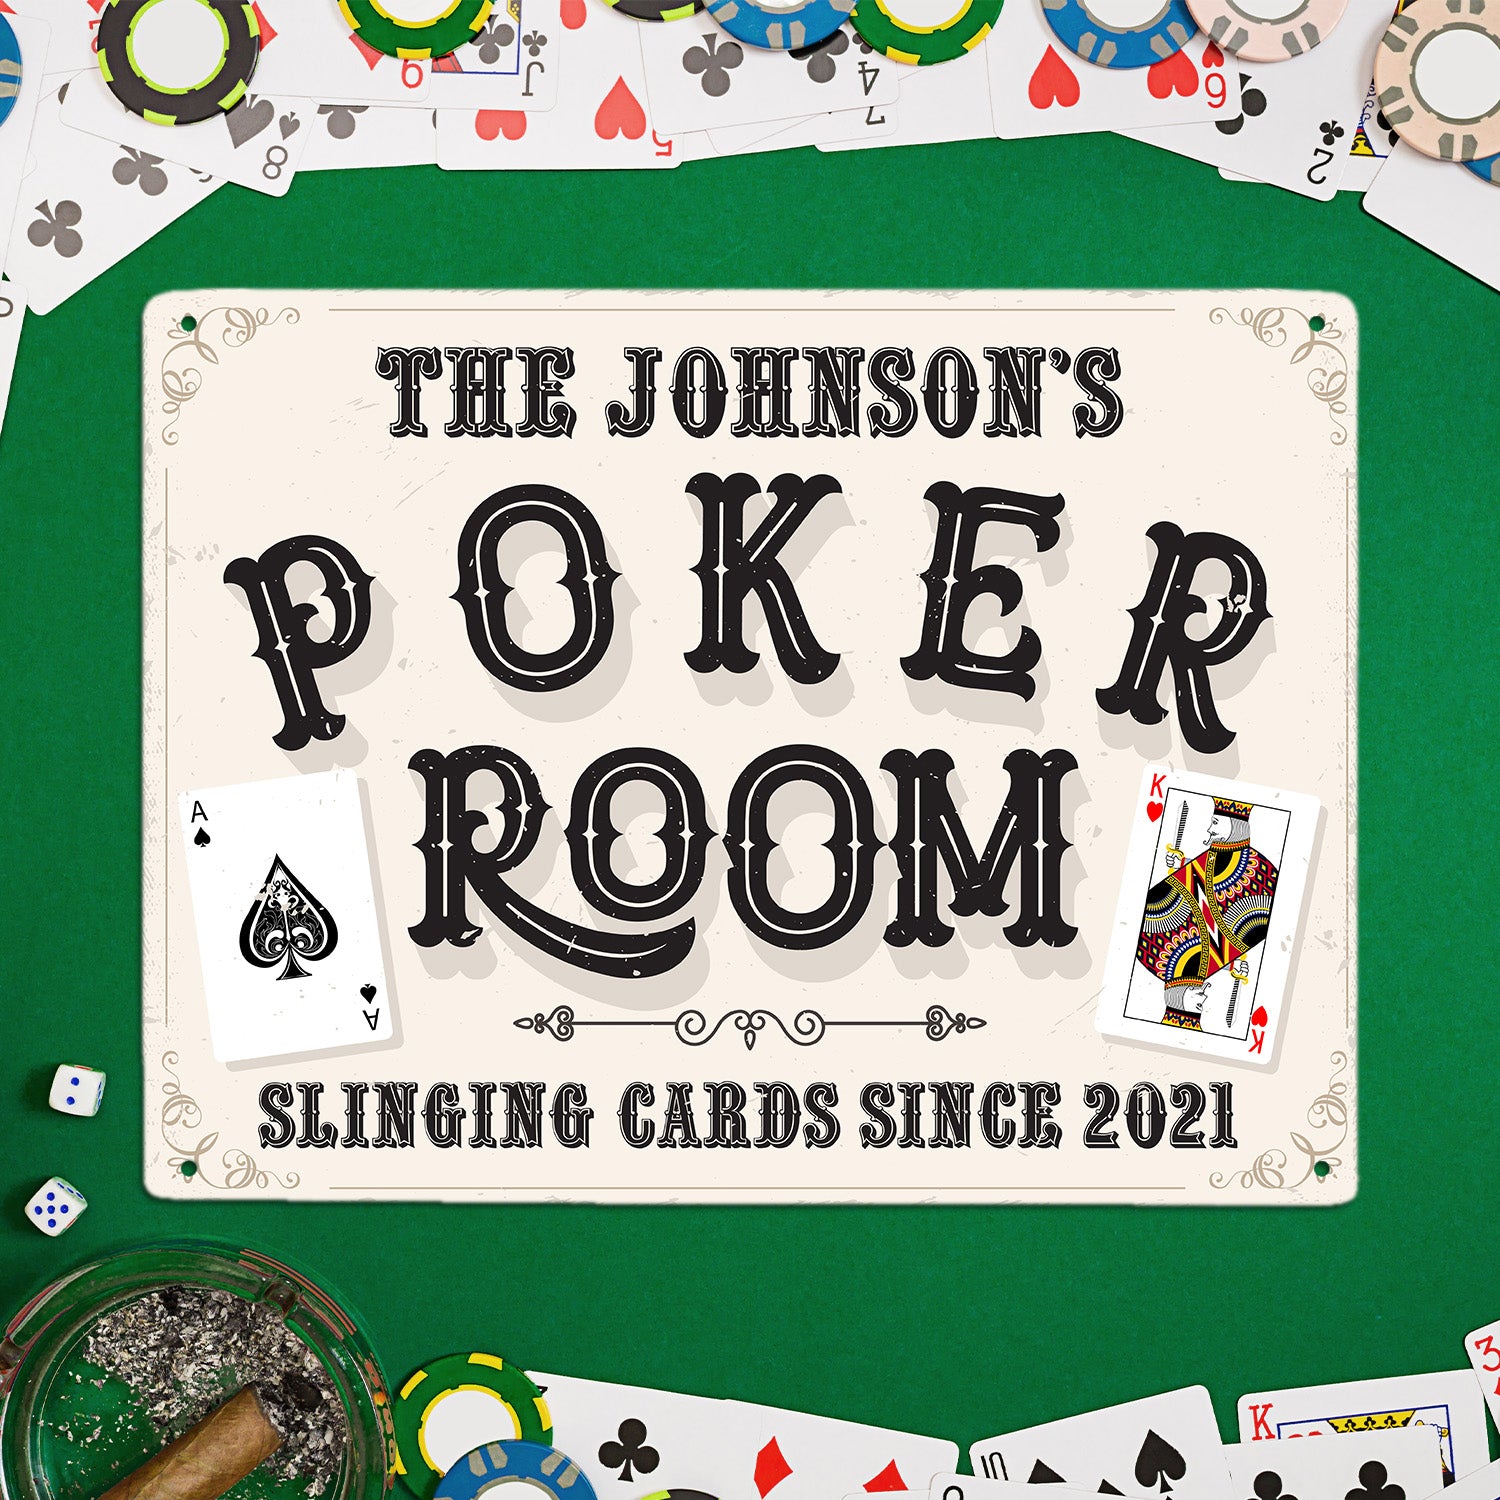 Poker Room, Slinging Cards, Custom Sign, Customizable Name